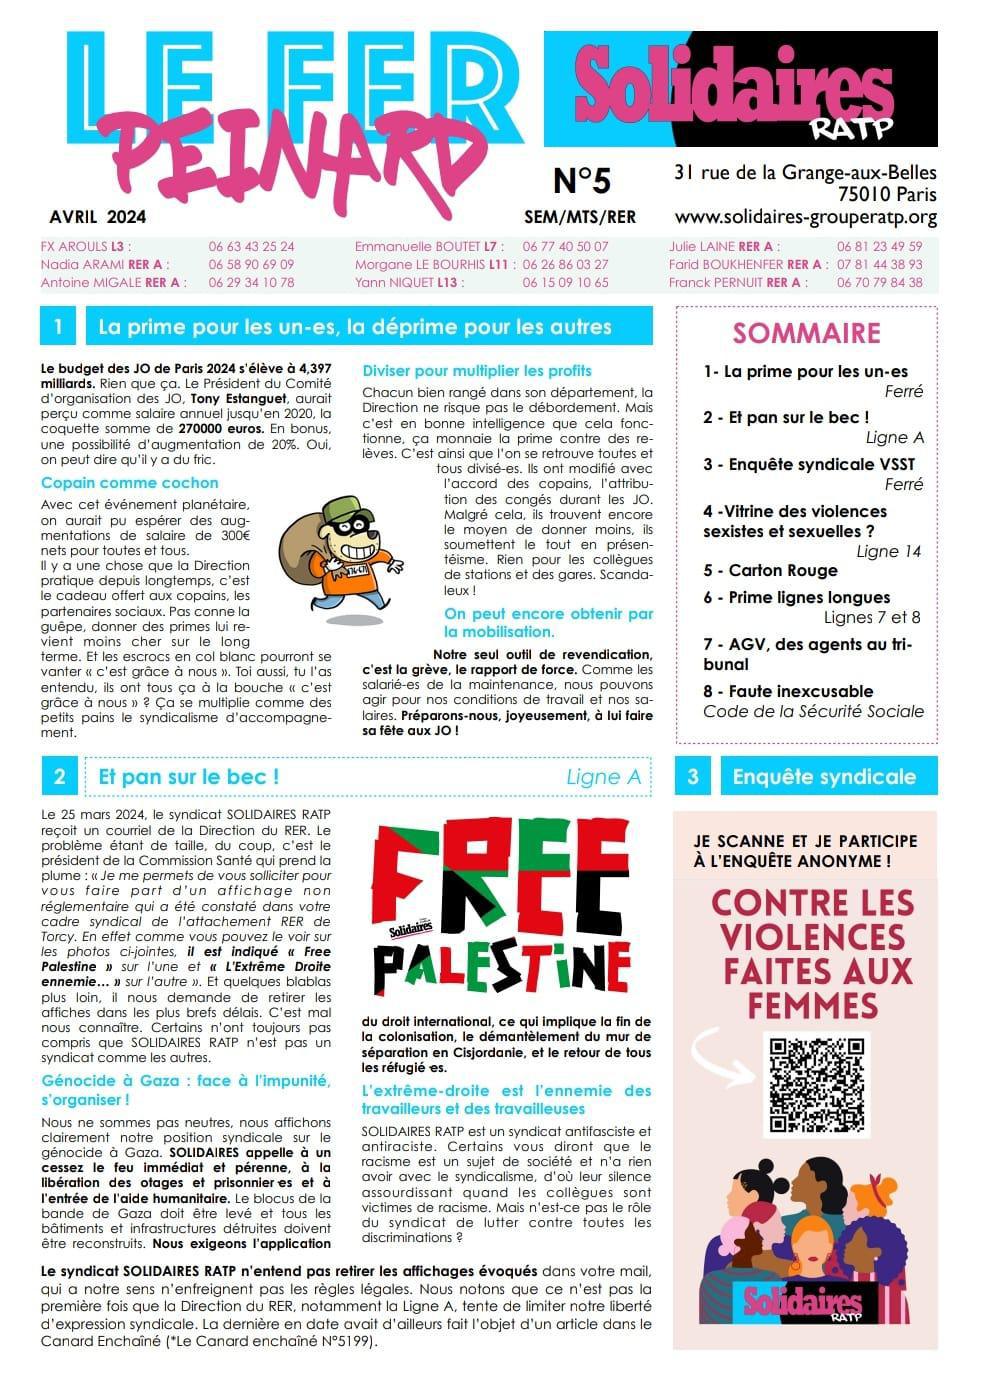 Solidaires RATP // Le Fer Peinard # 5 d'avril 2024